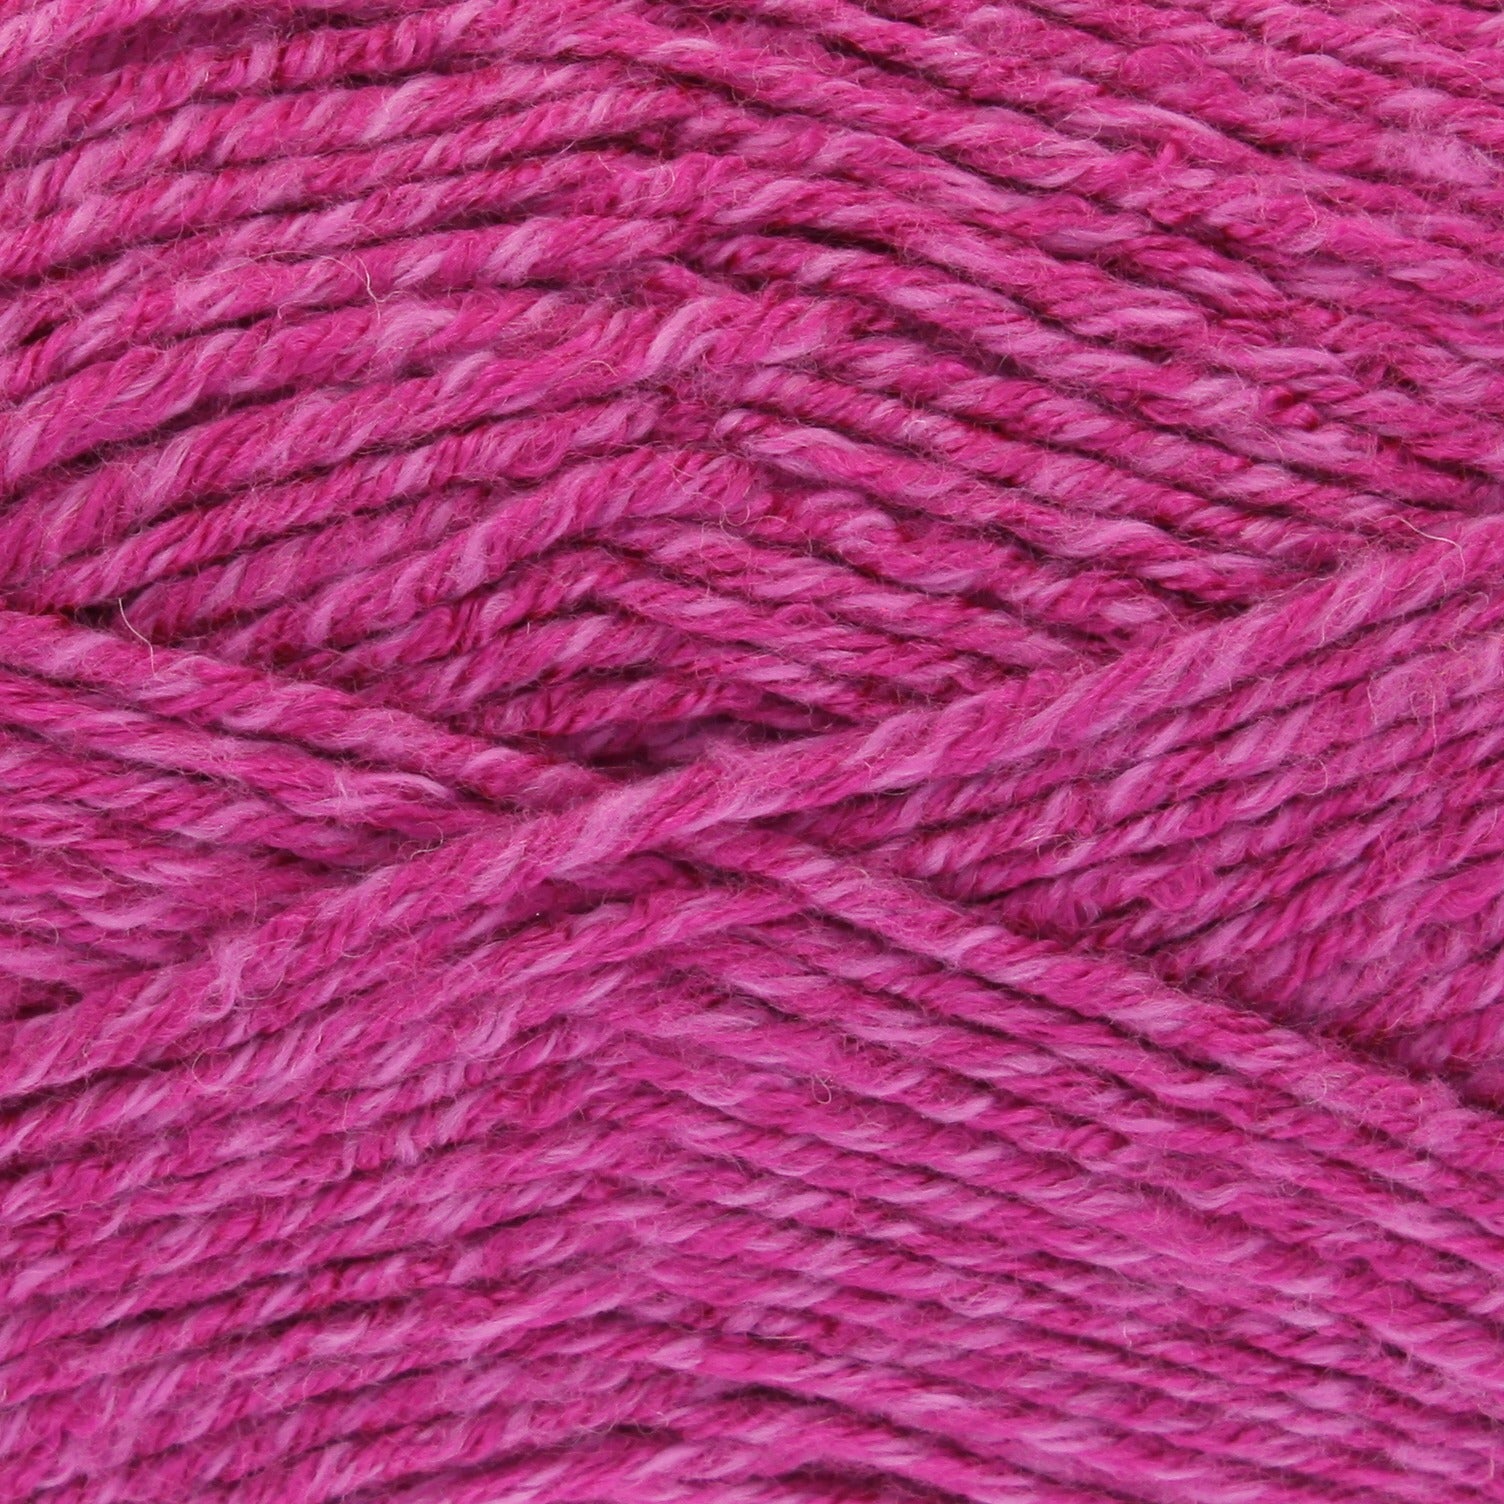 Dark pink and light pink yarn